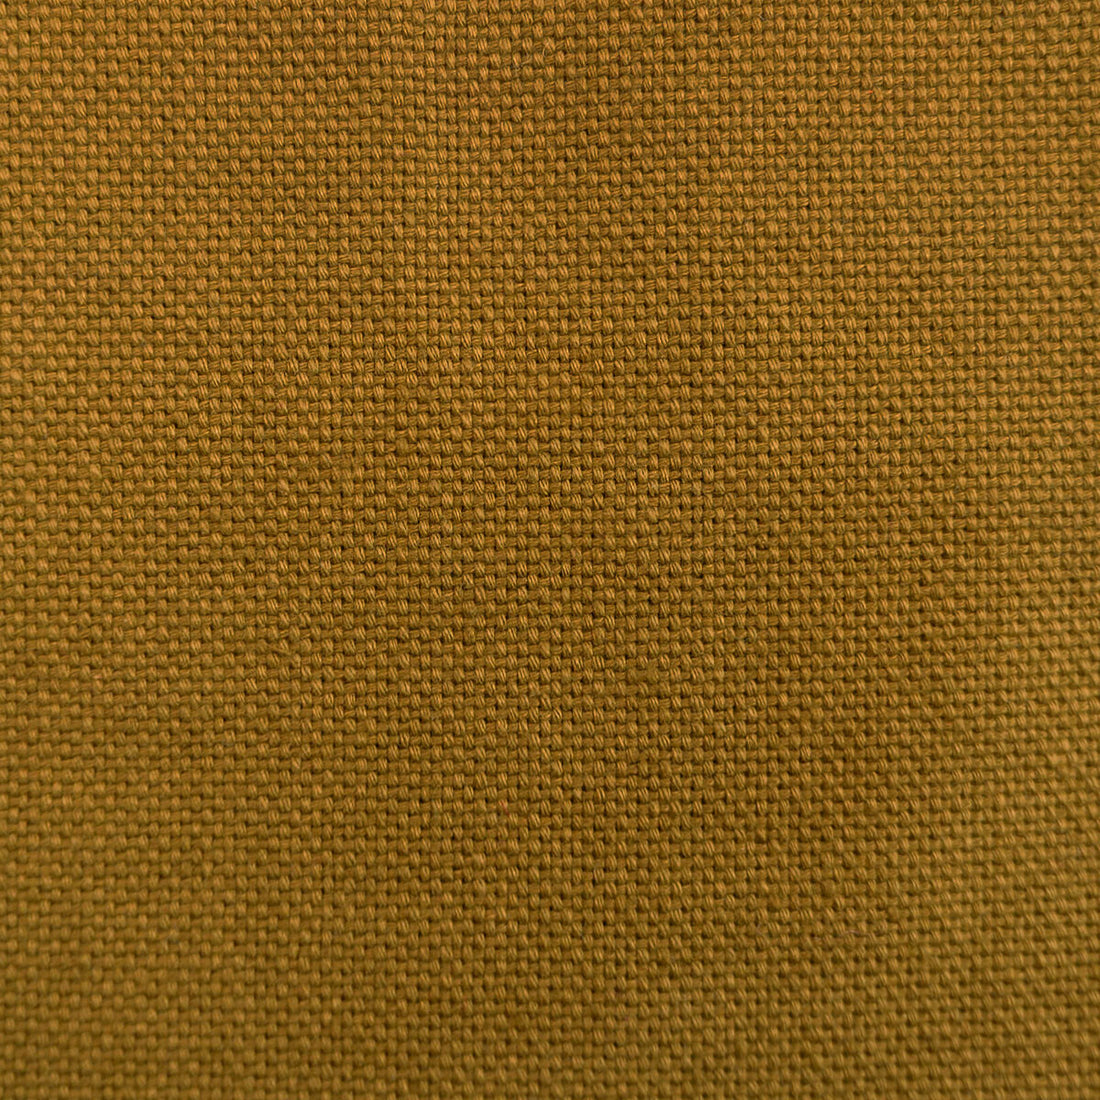 Dobra fabric in oro color - pattern LCT1075.022.0 - by Gaston y Daniela in the Lorenzo Castillo VII The Rectory collection